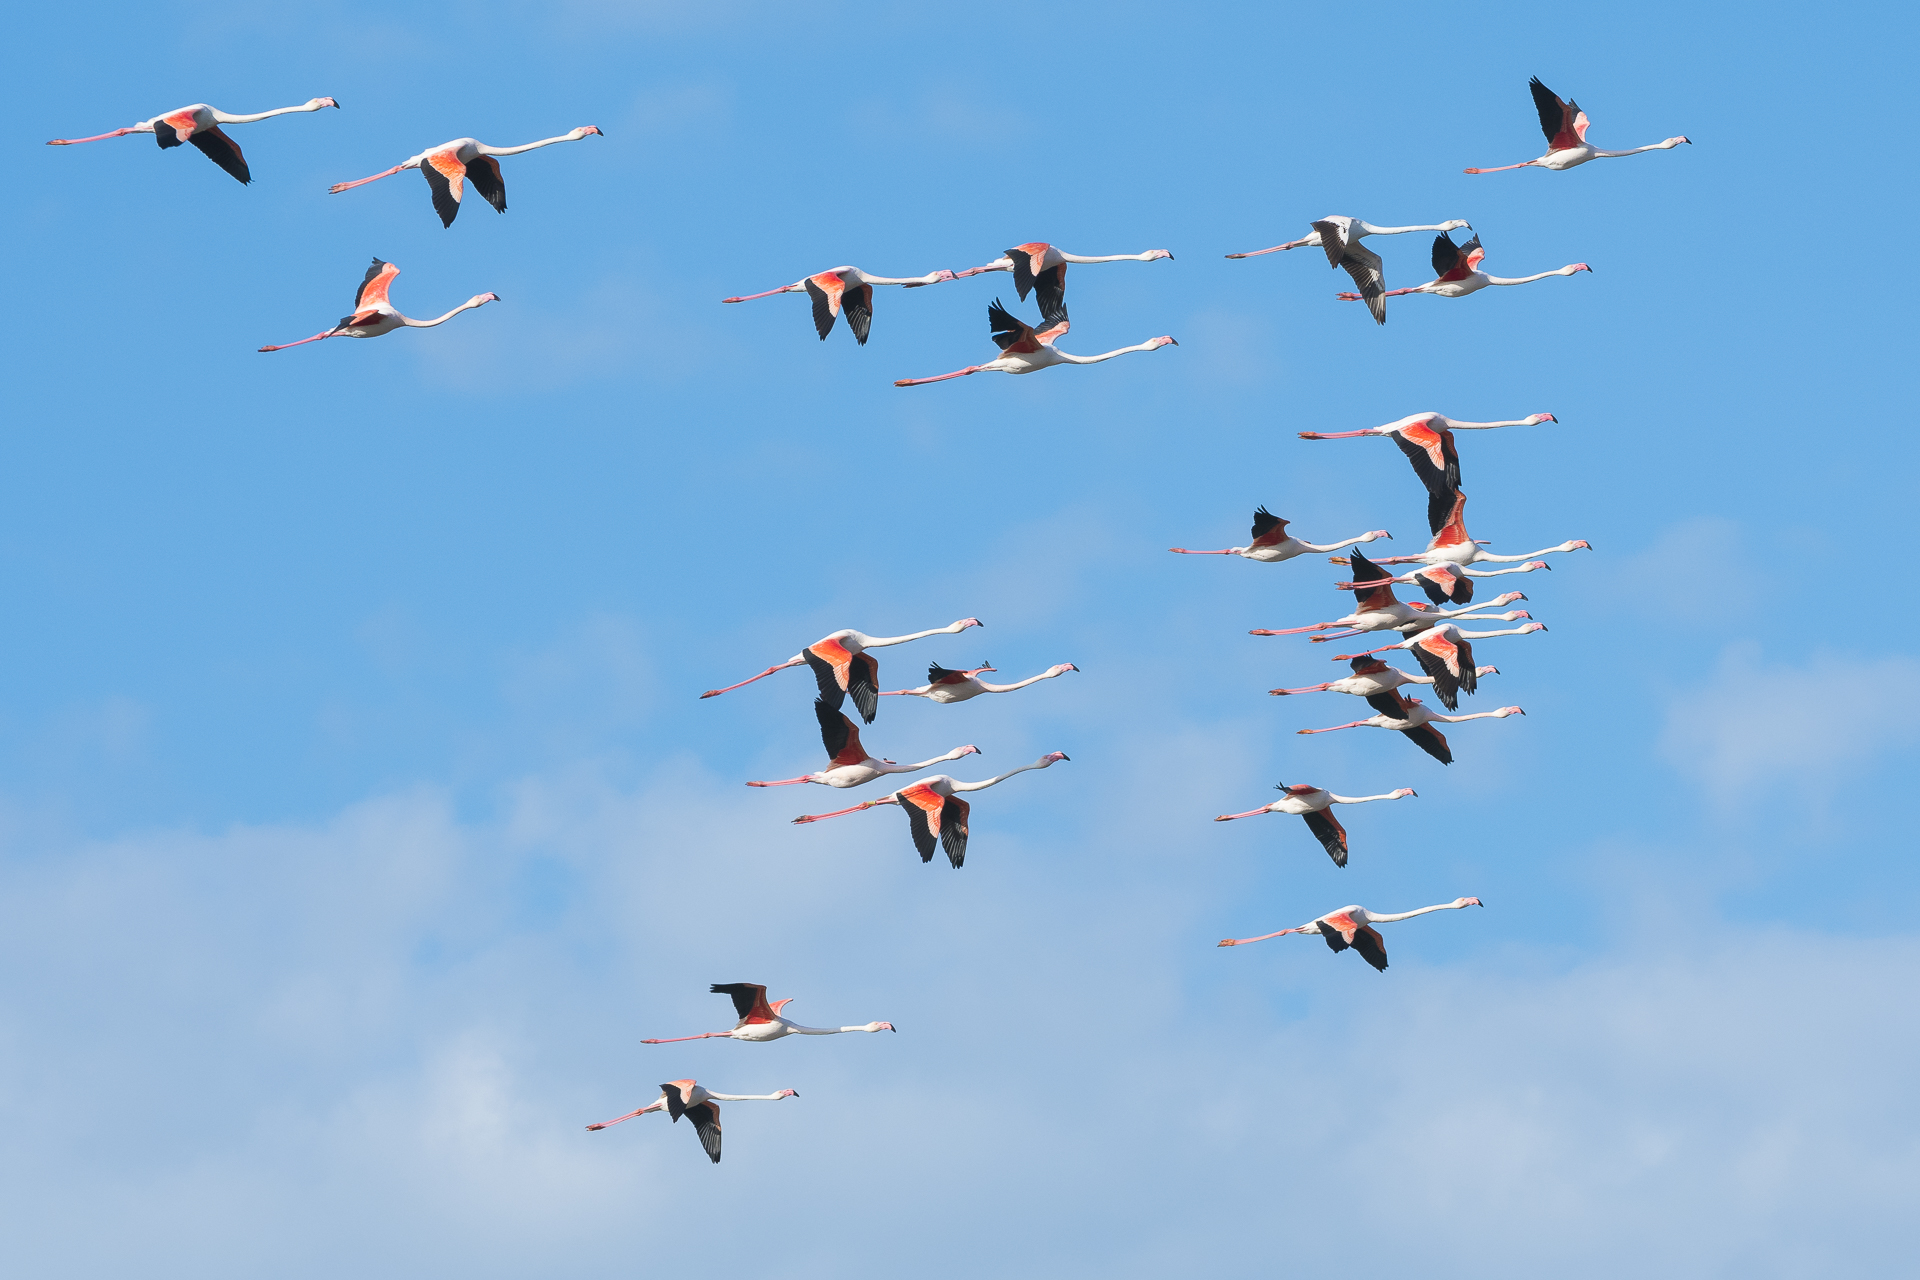 Flock of greater flamingos. Parc naturel régional de Camargue, France.